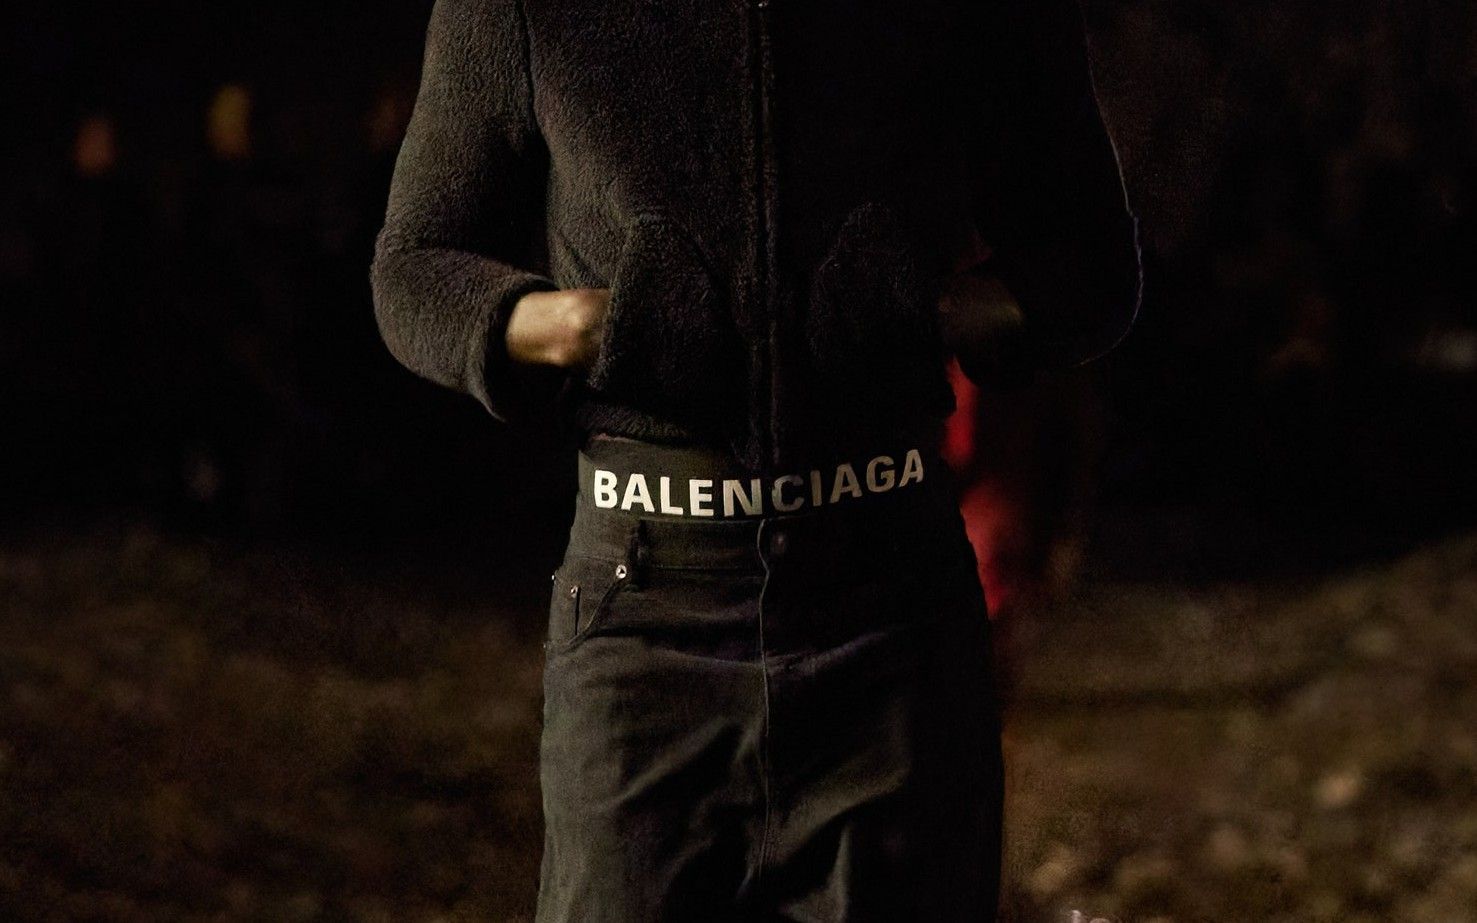 What would Cristobàl think of Balenciaga?